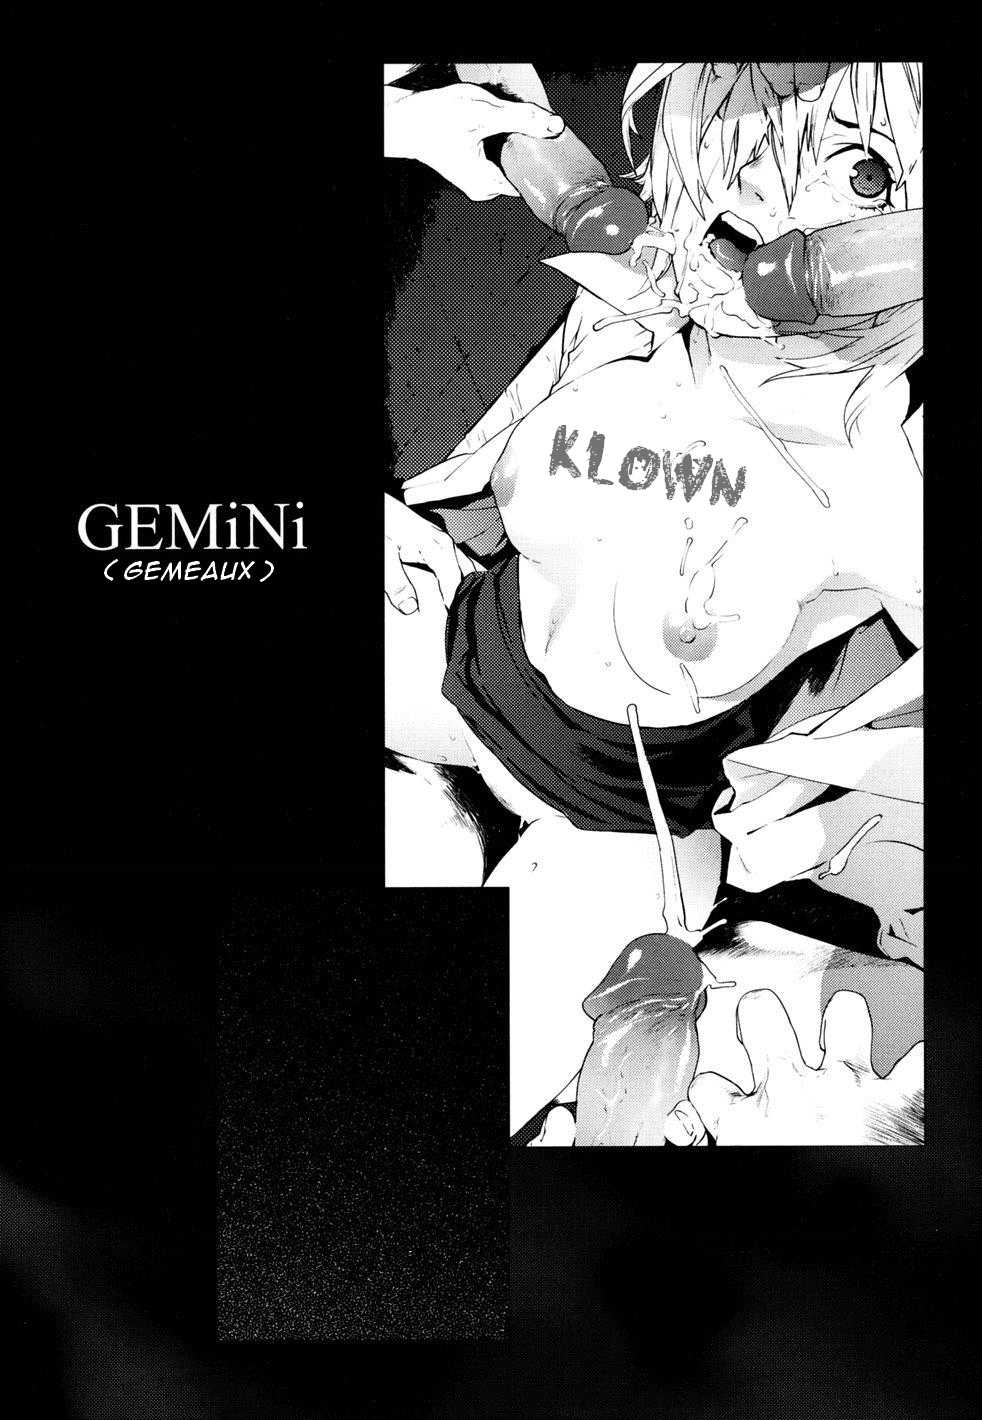 [Yukimi] Gemini [French] (KL0WN) 